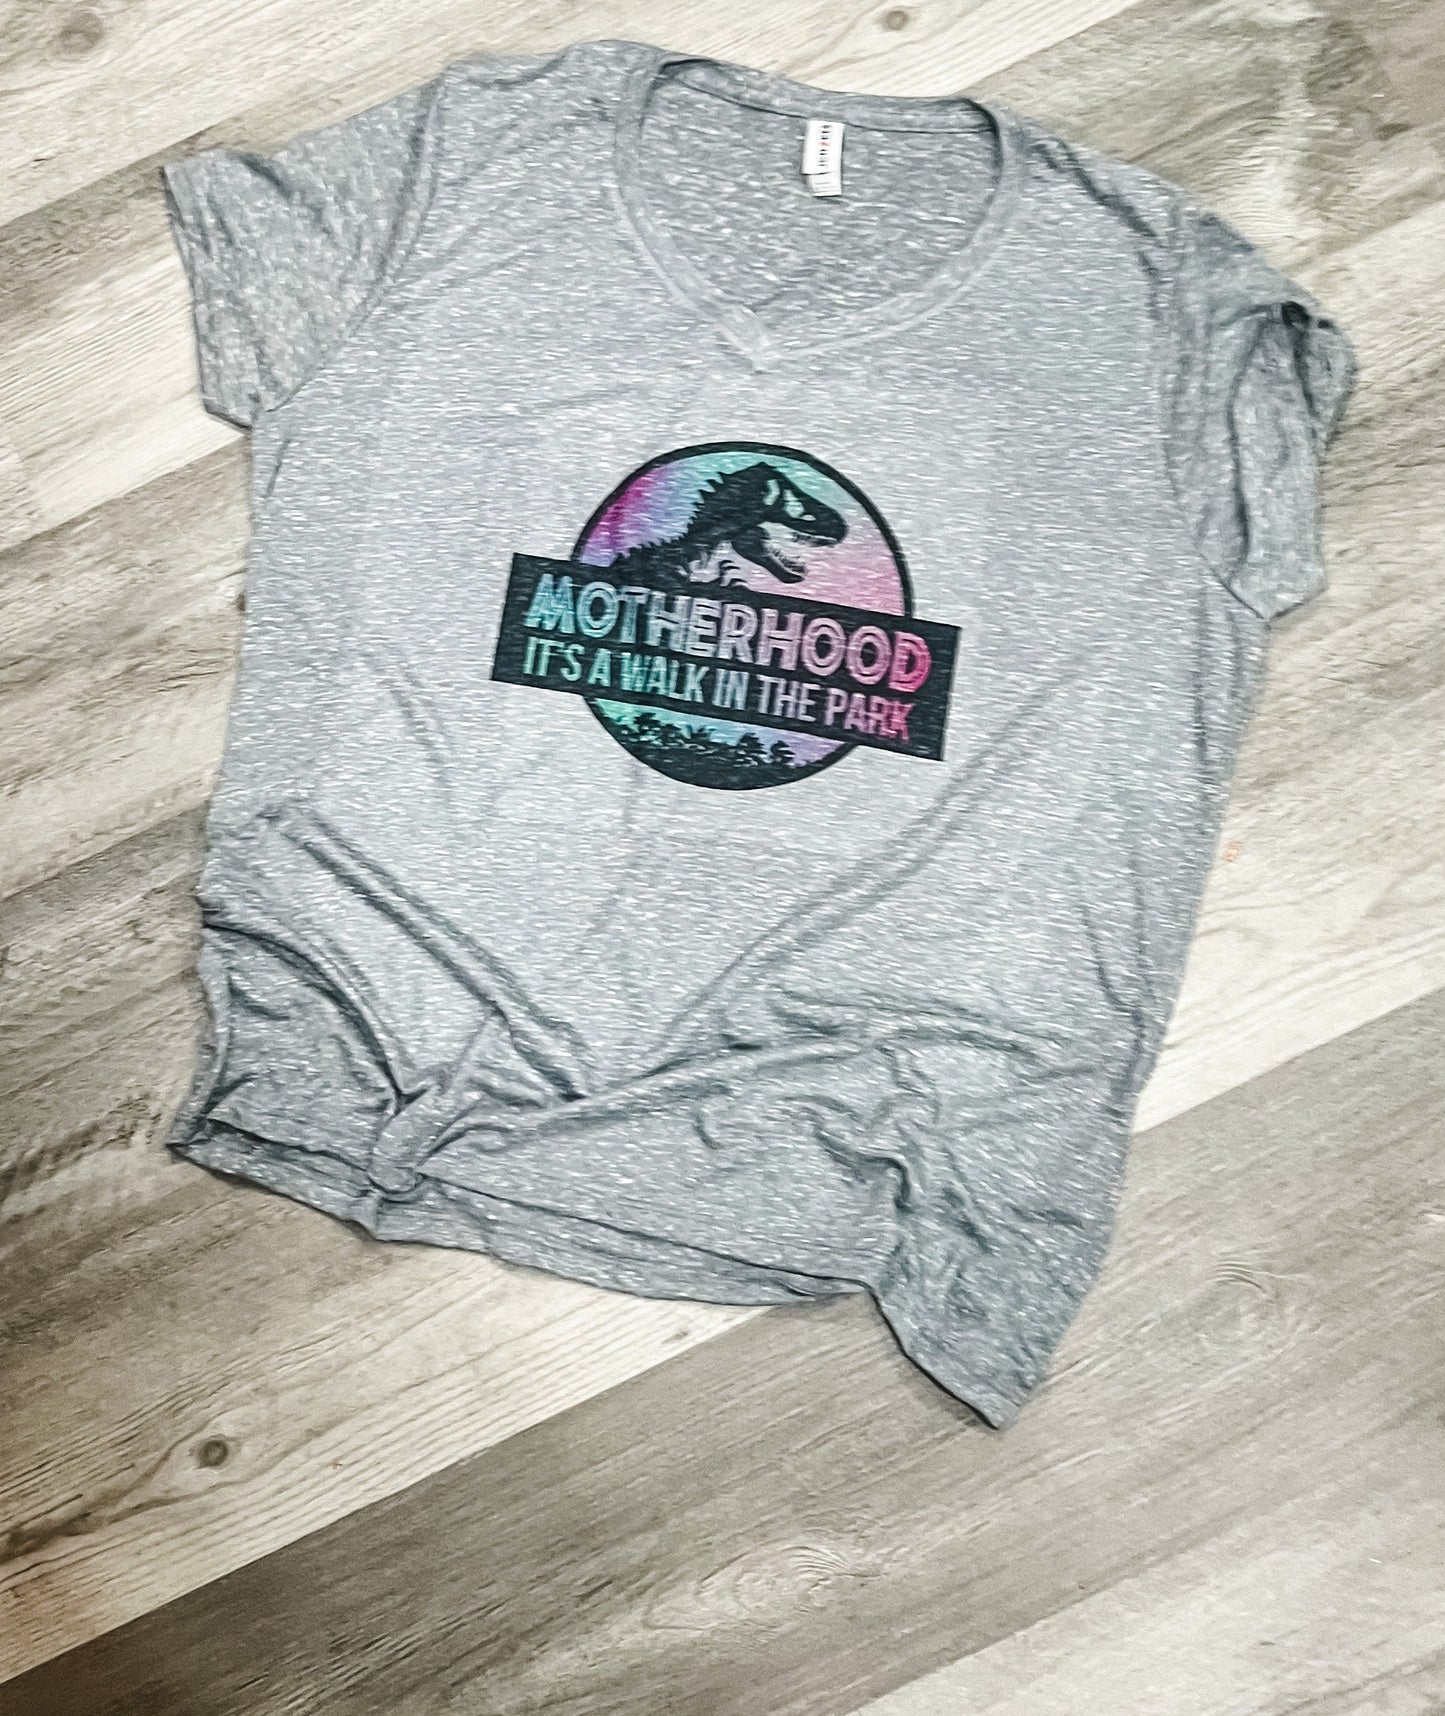 Mom shirt | Motherhood It's a Walk in the Park